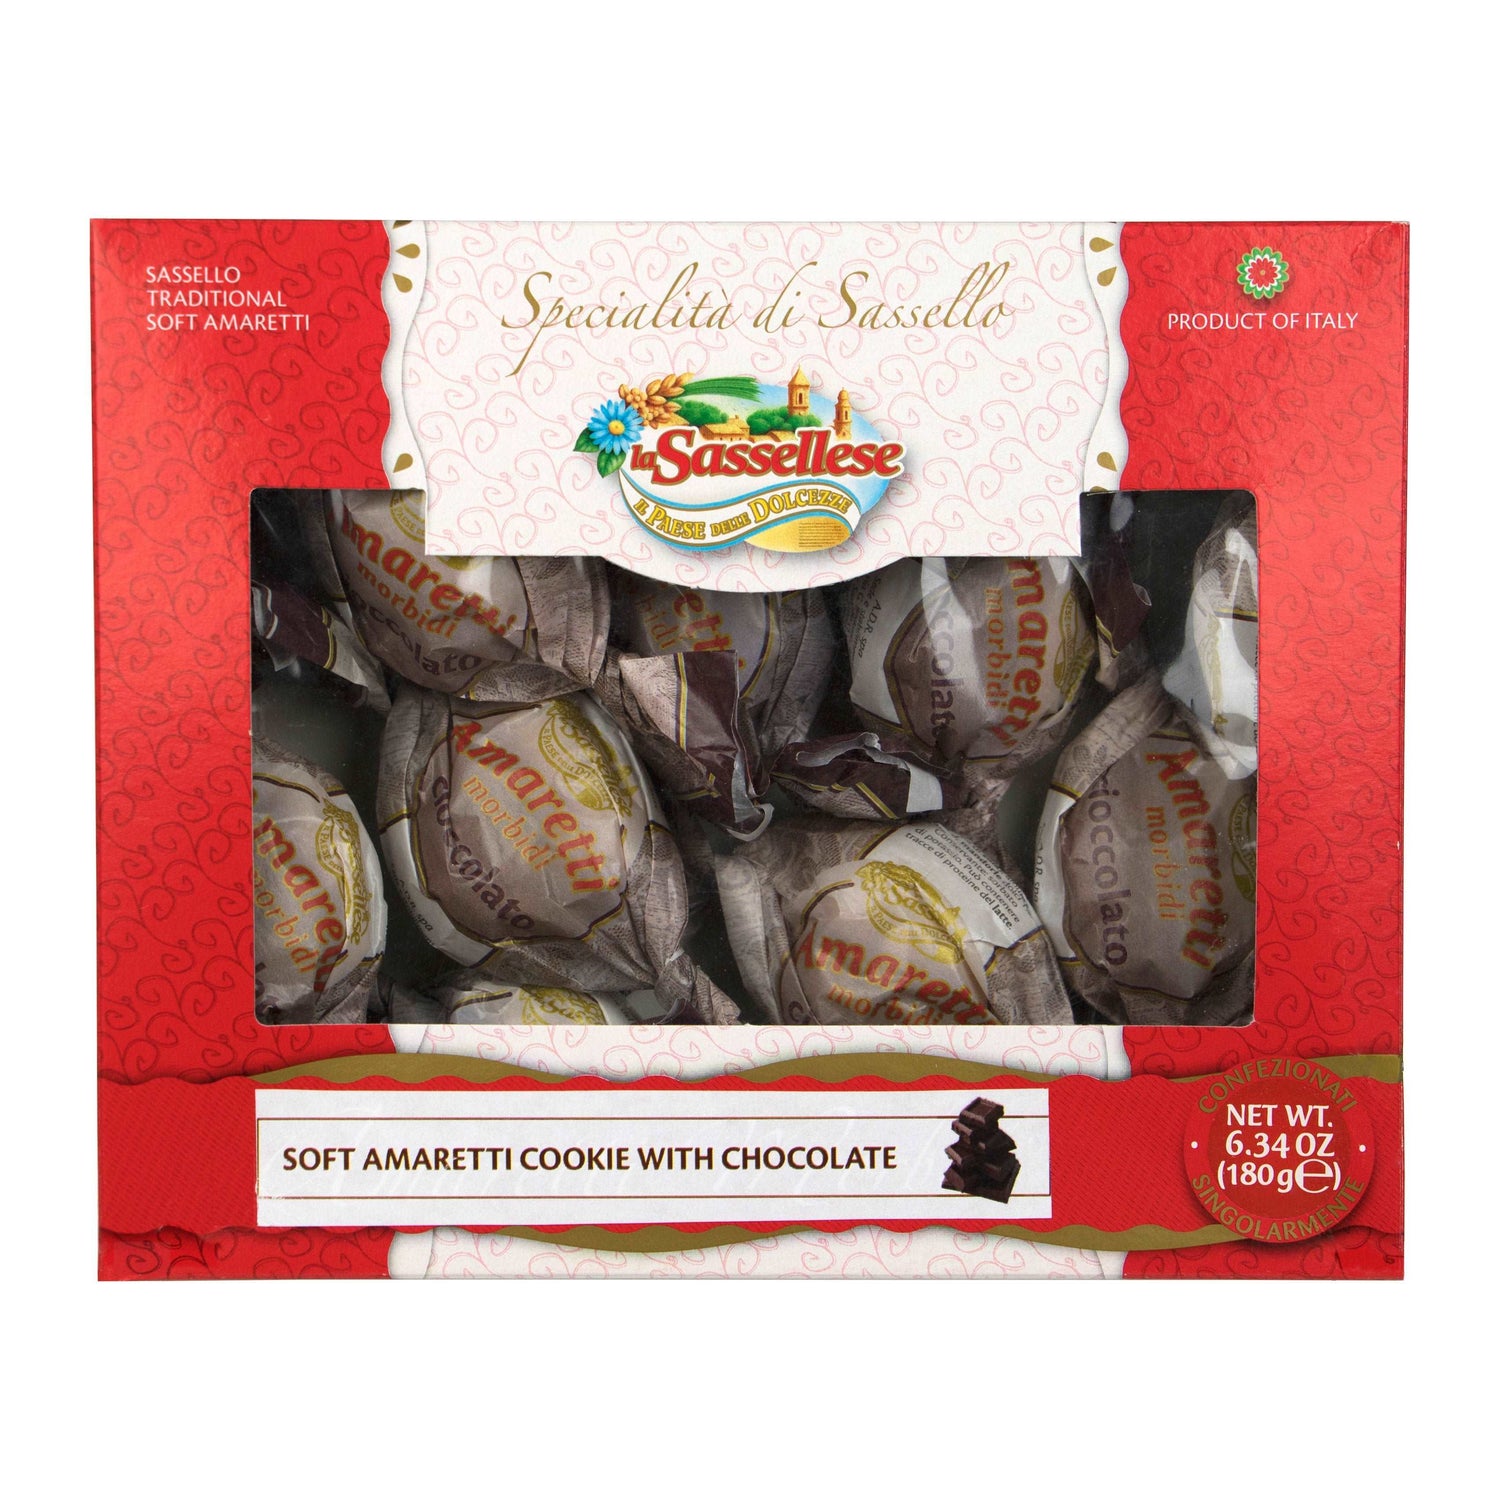 La Sassellese Soft Amaretti with Chocolate